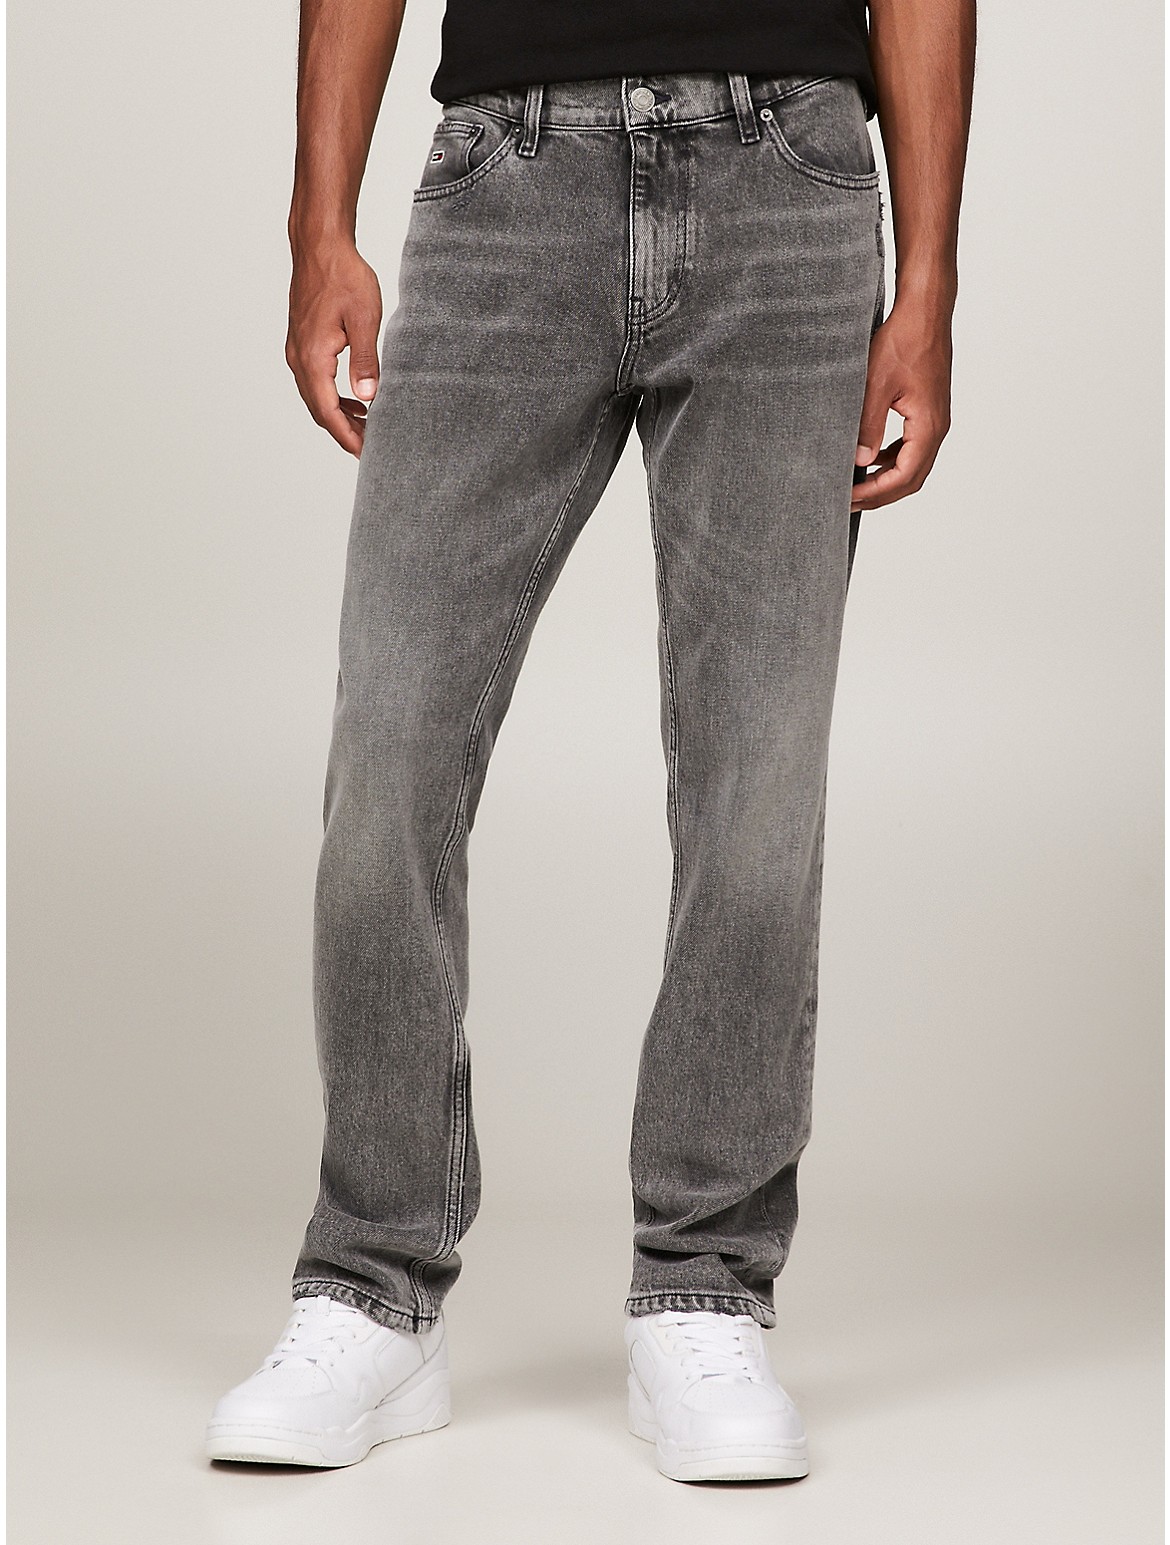 Tommy Hilfiger Men's Mid Rise Straight-Fit Black Wash Jean